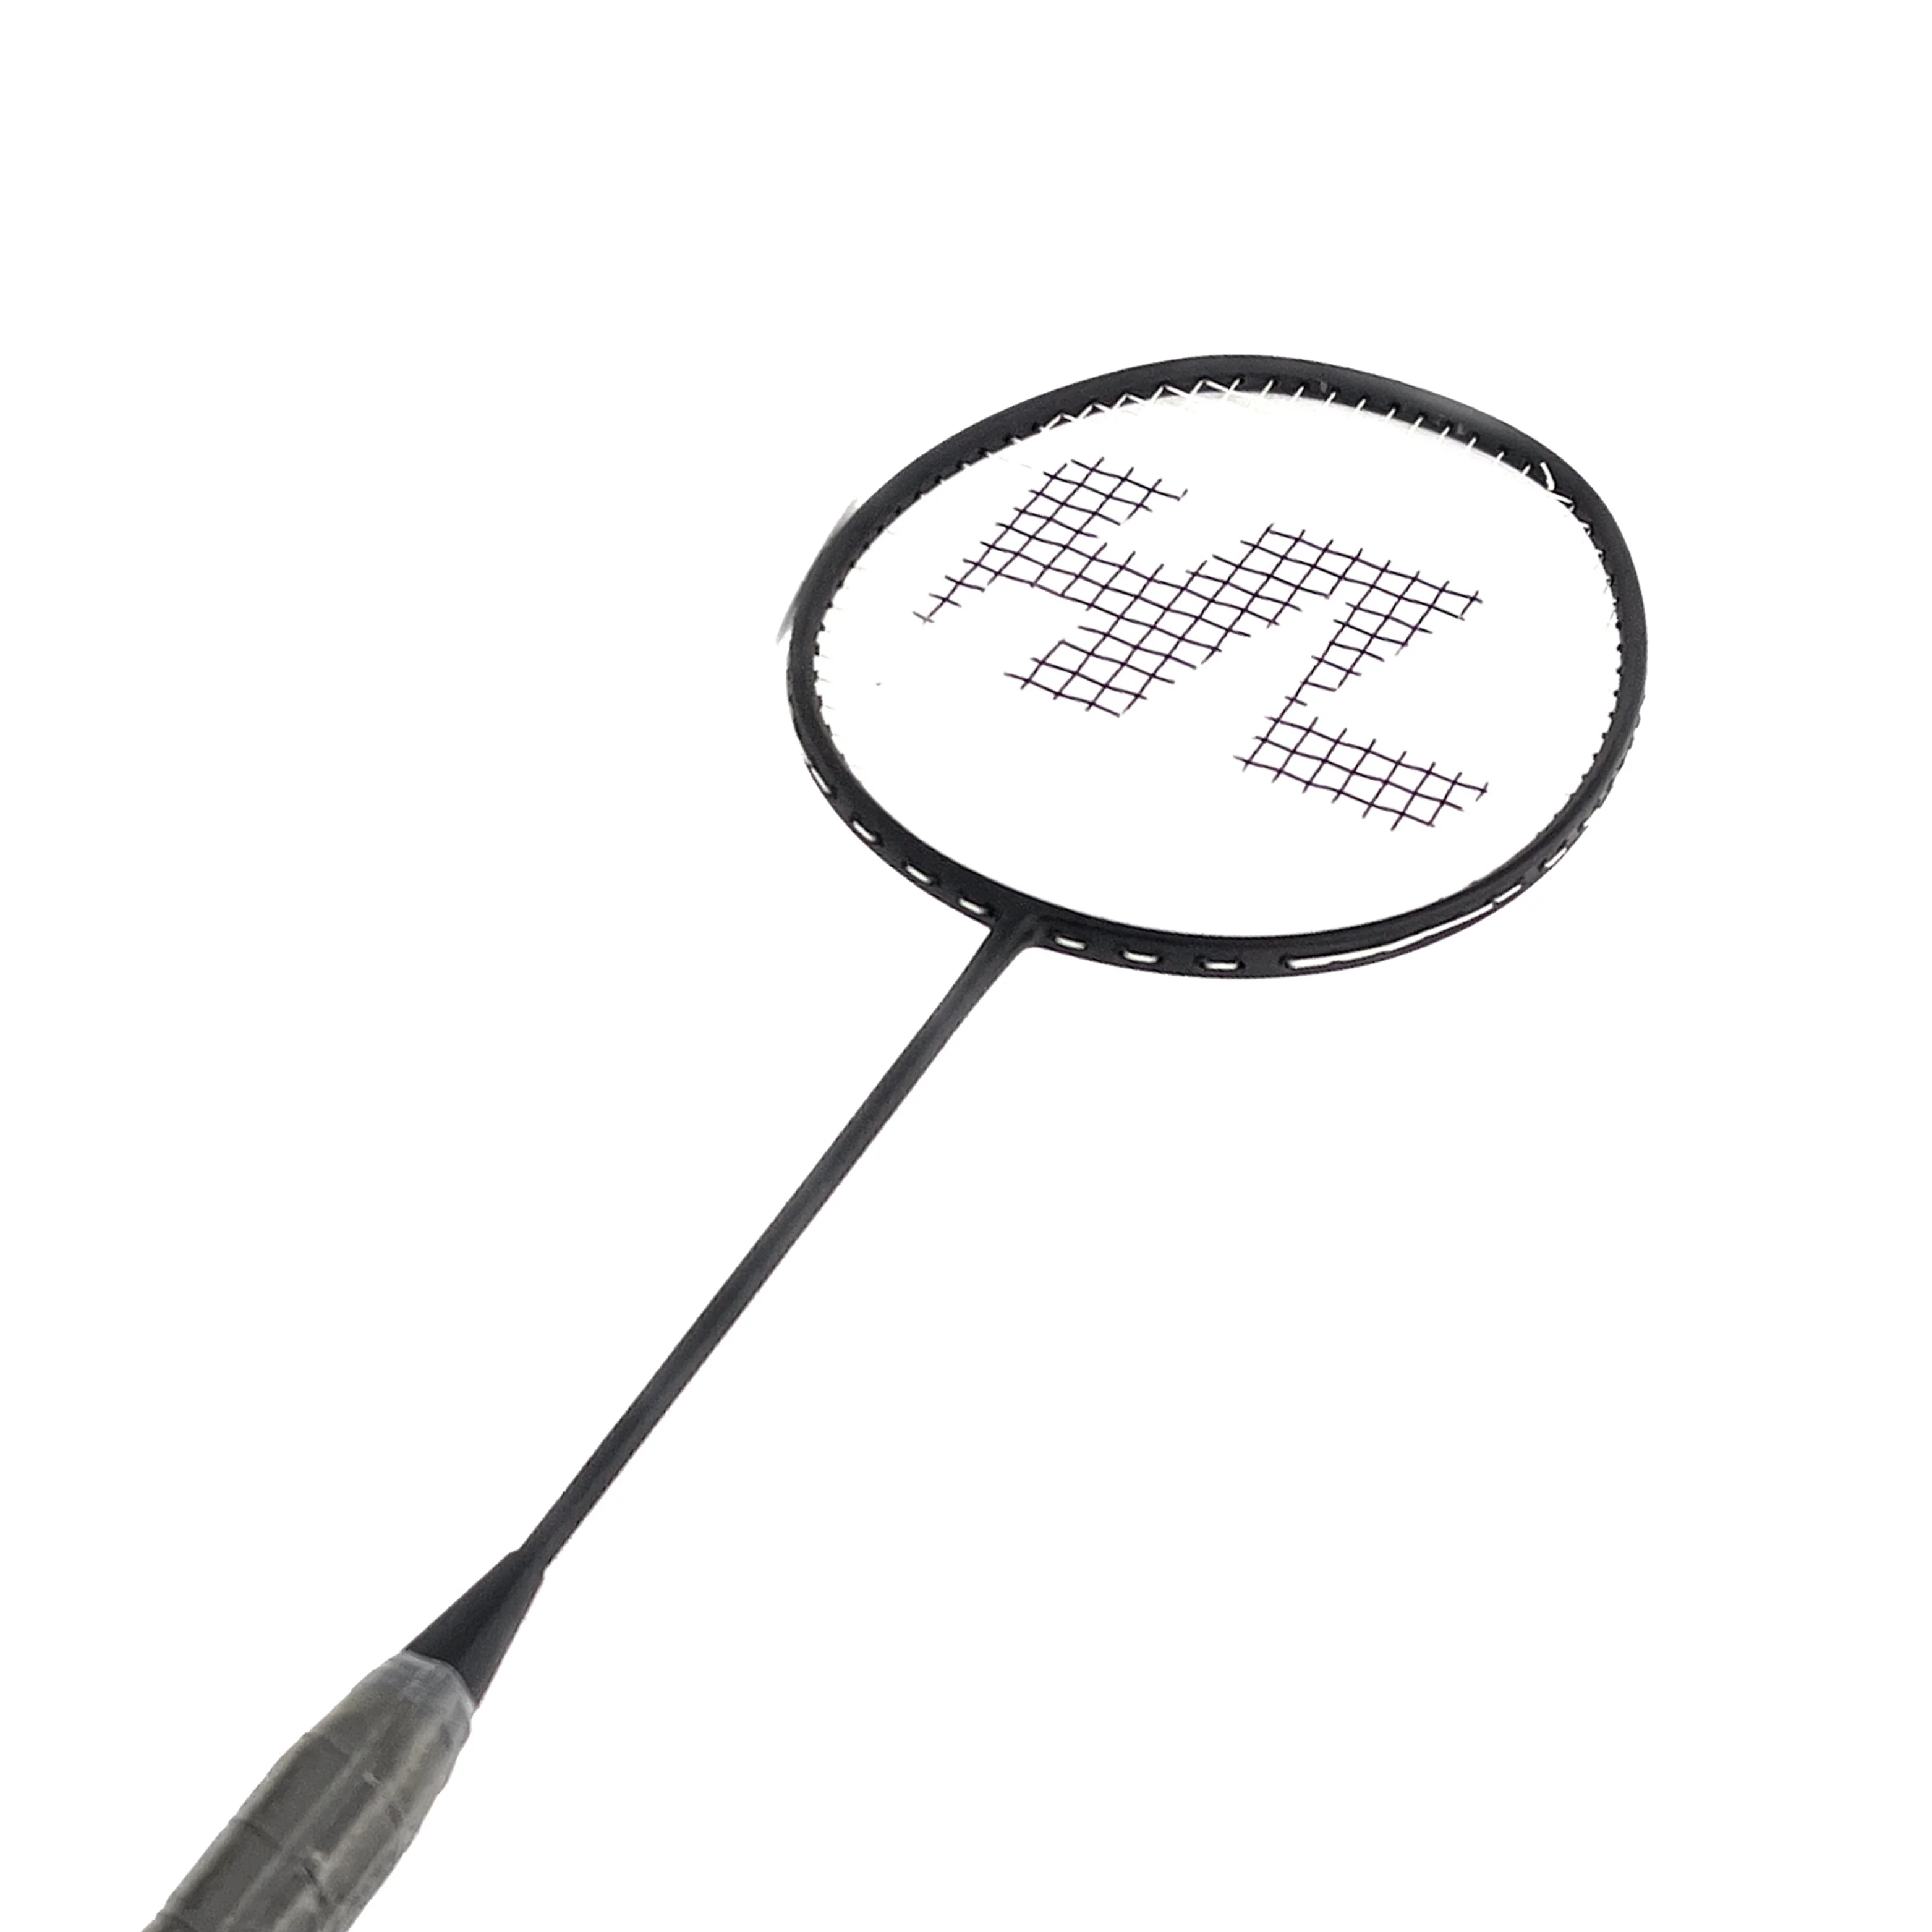 

Professional High quality carbon fiber badminton racket racquet